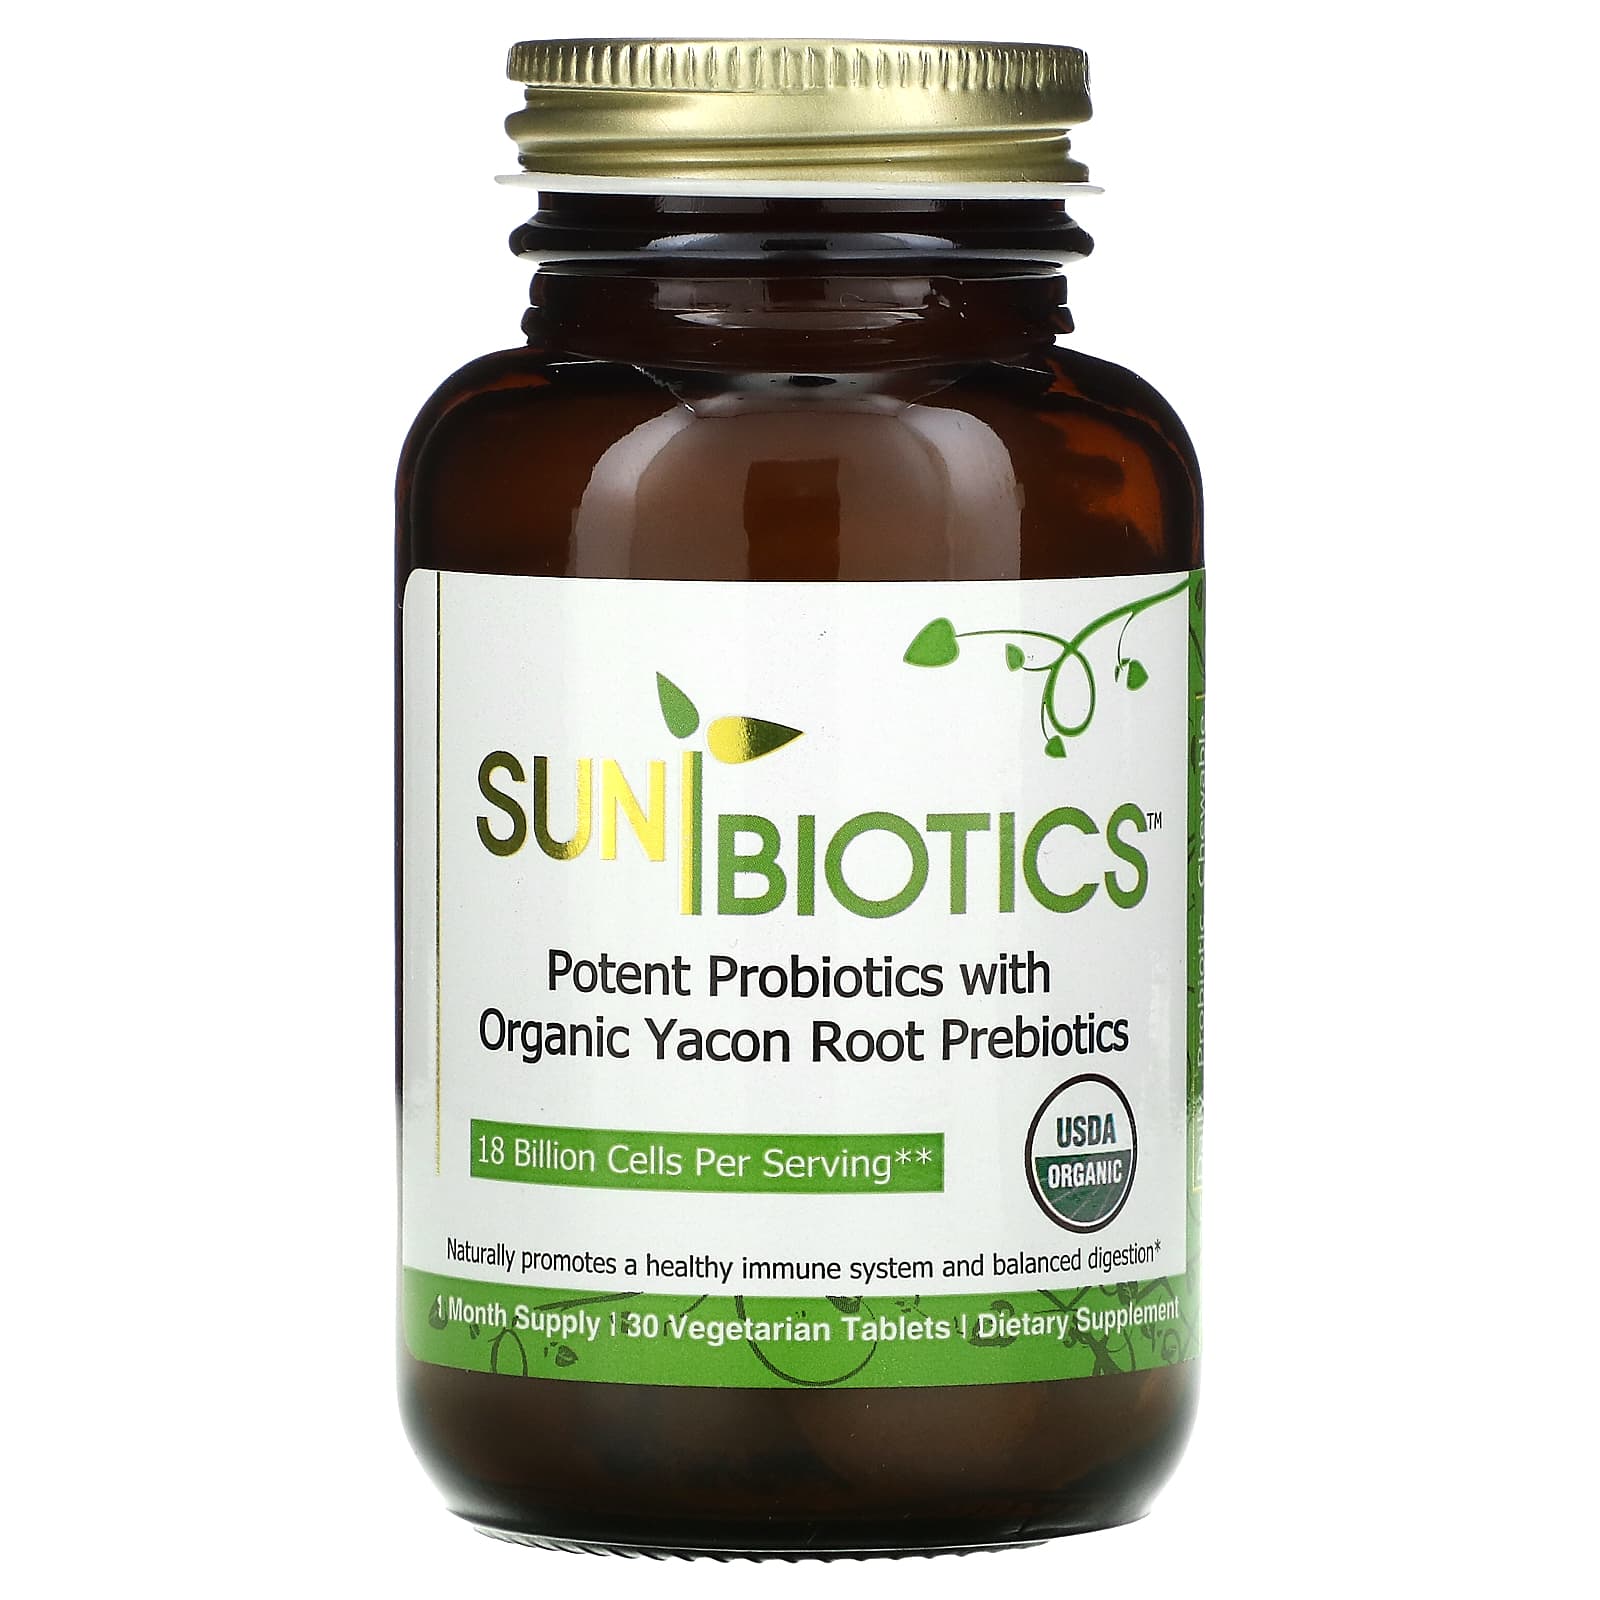 Пробиотики Sunbiotics с органическими пребиотиками корня якона, 30 вегетарианских таблеток